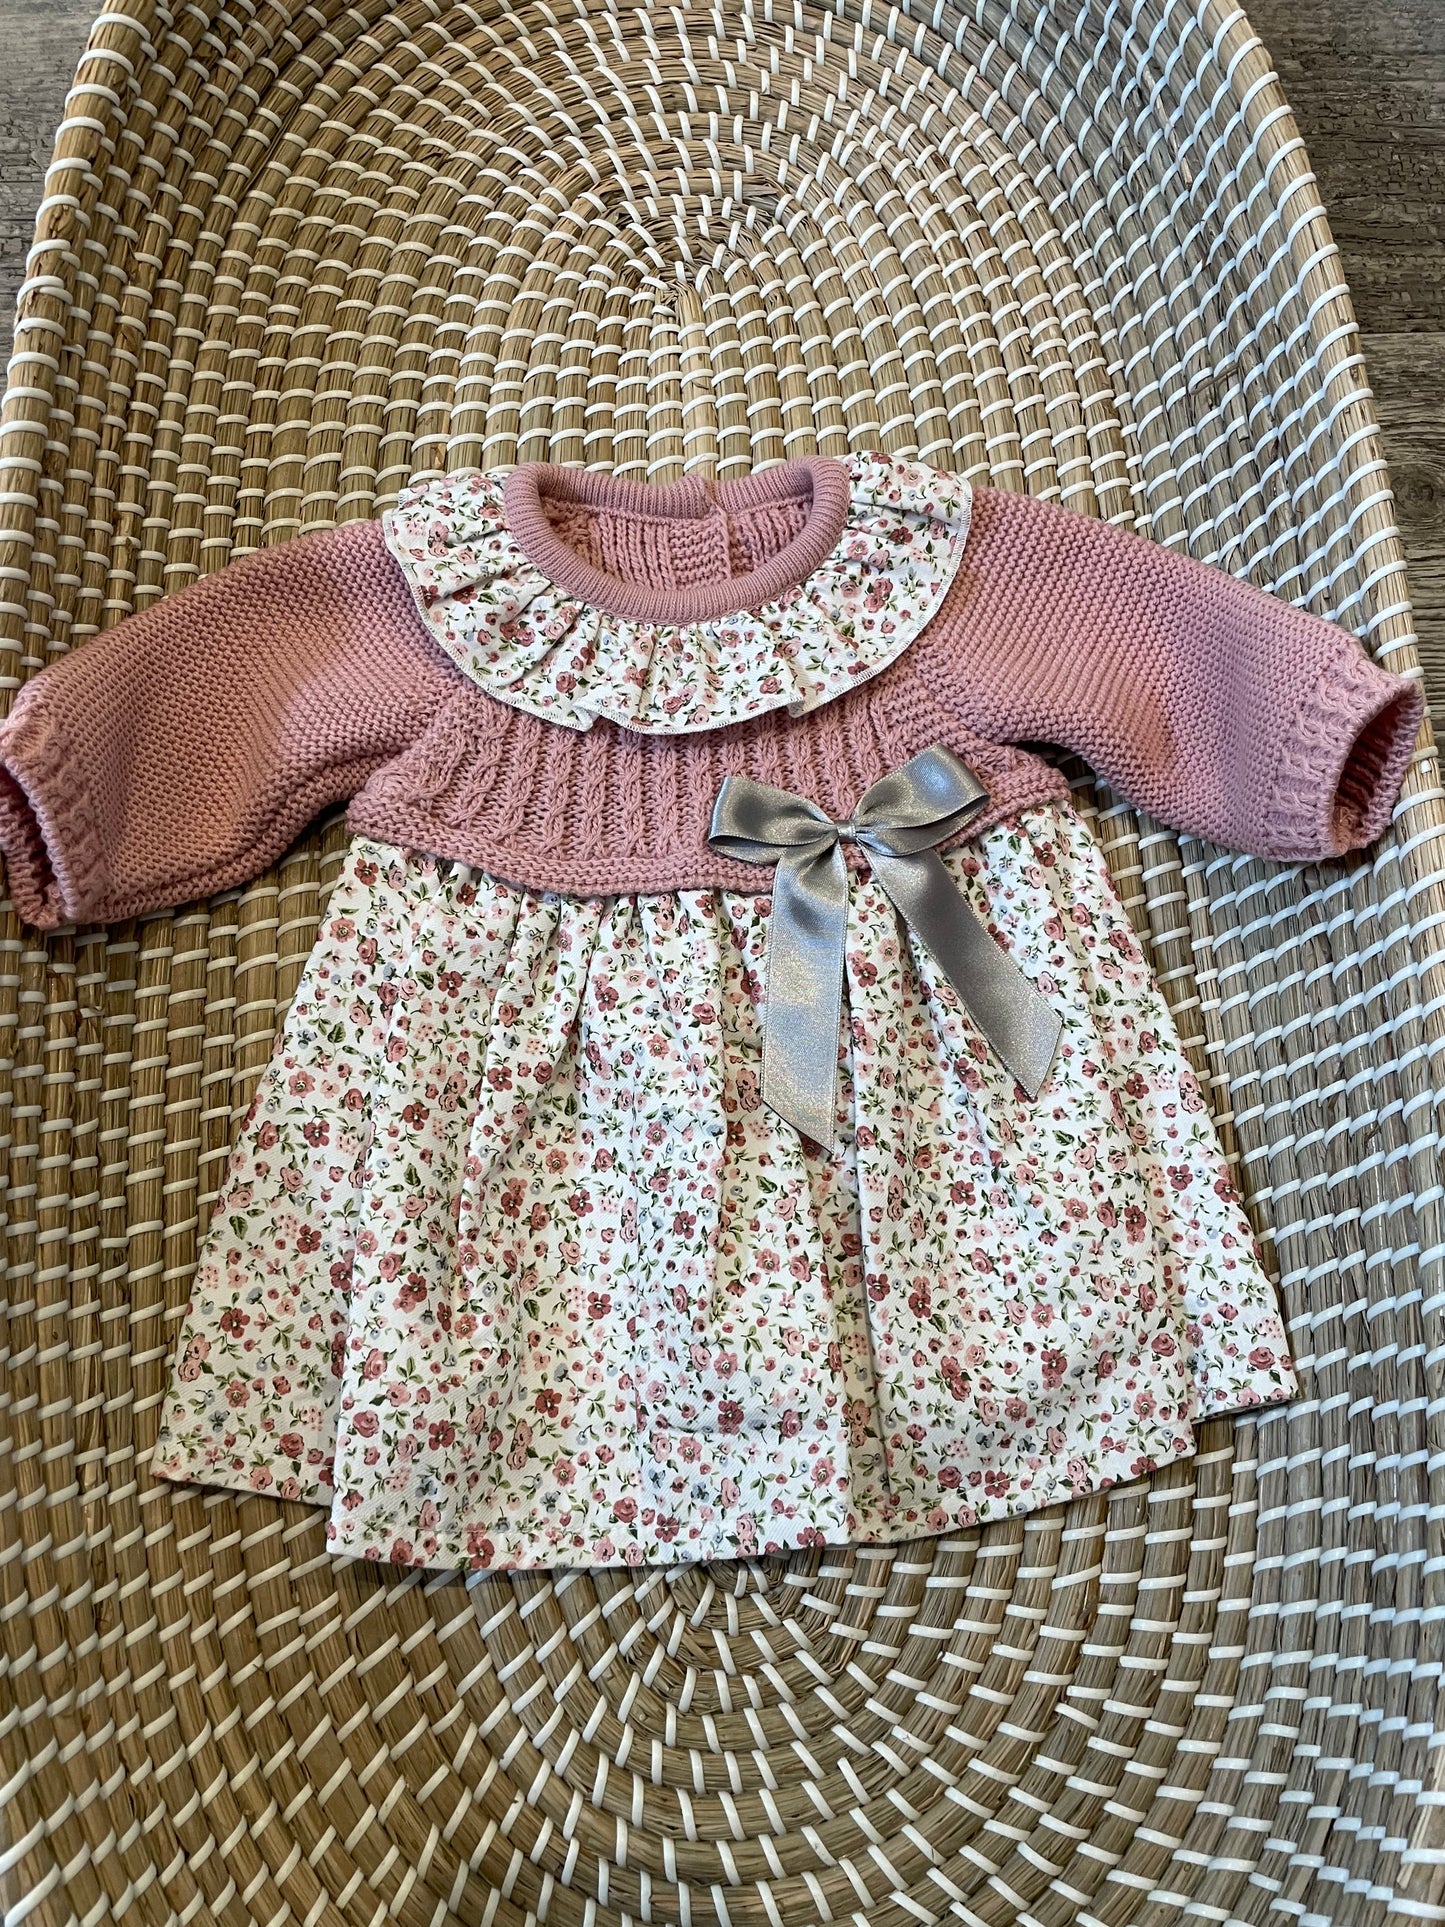 The pink half knit dress